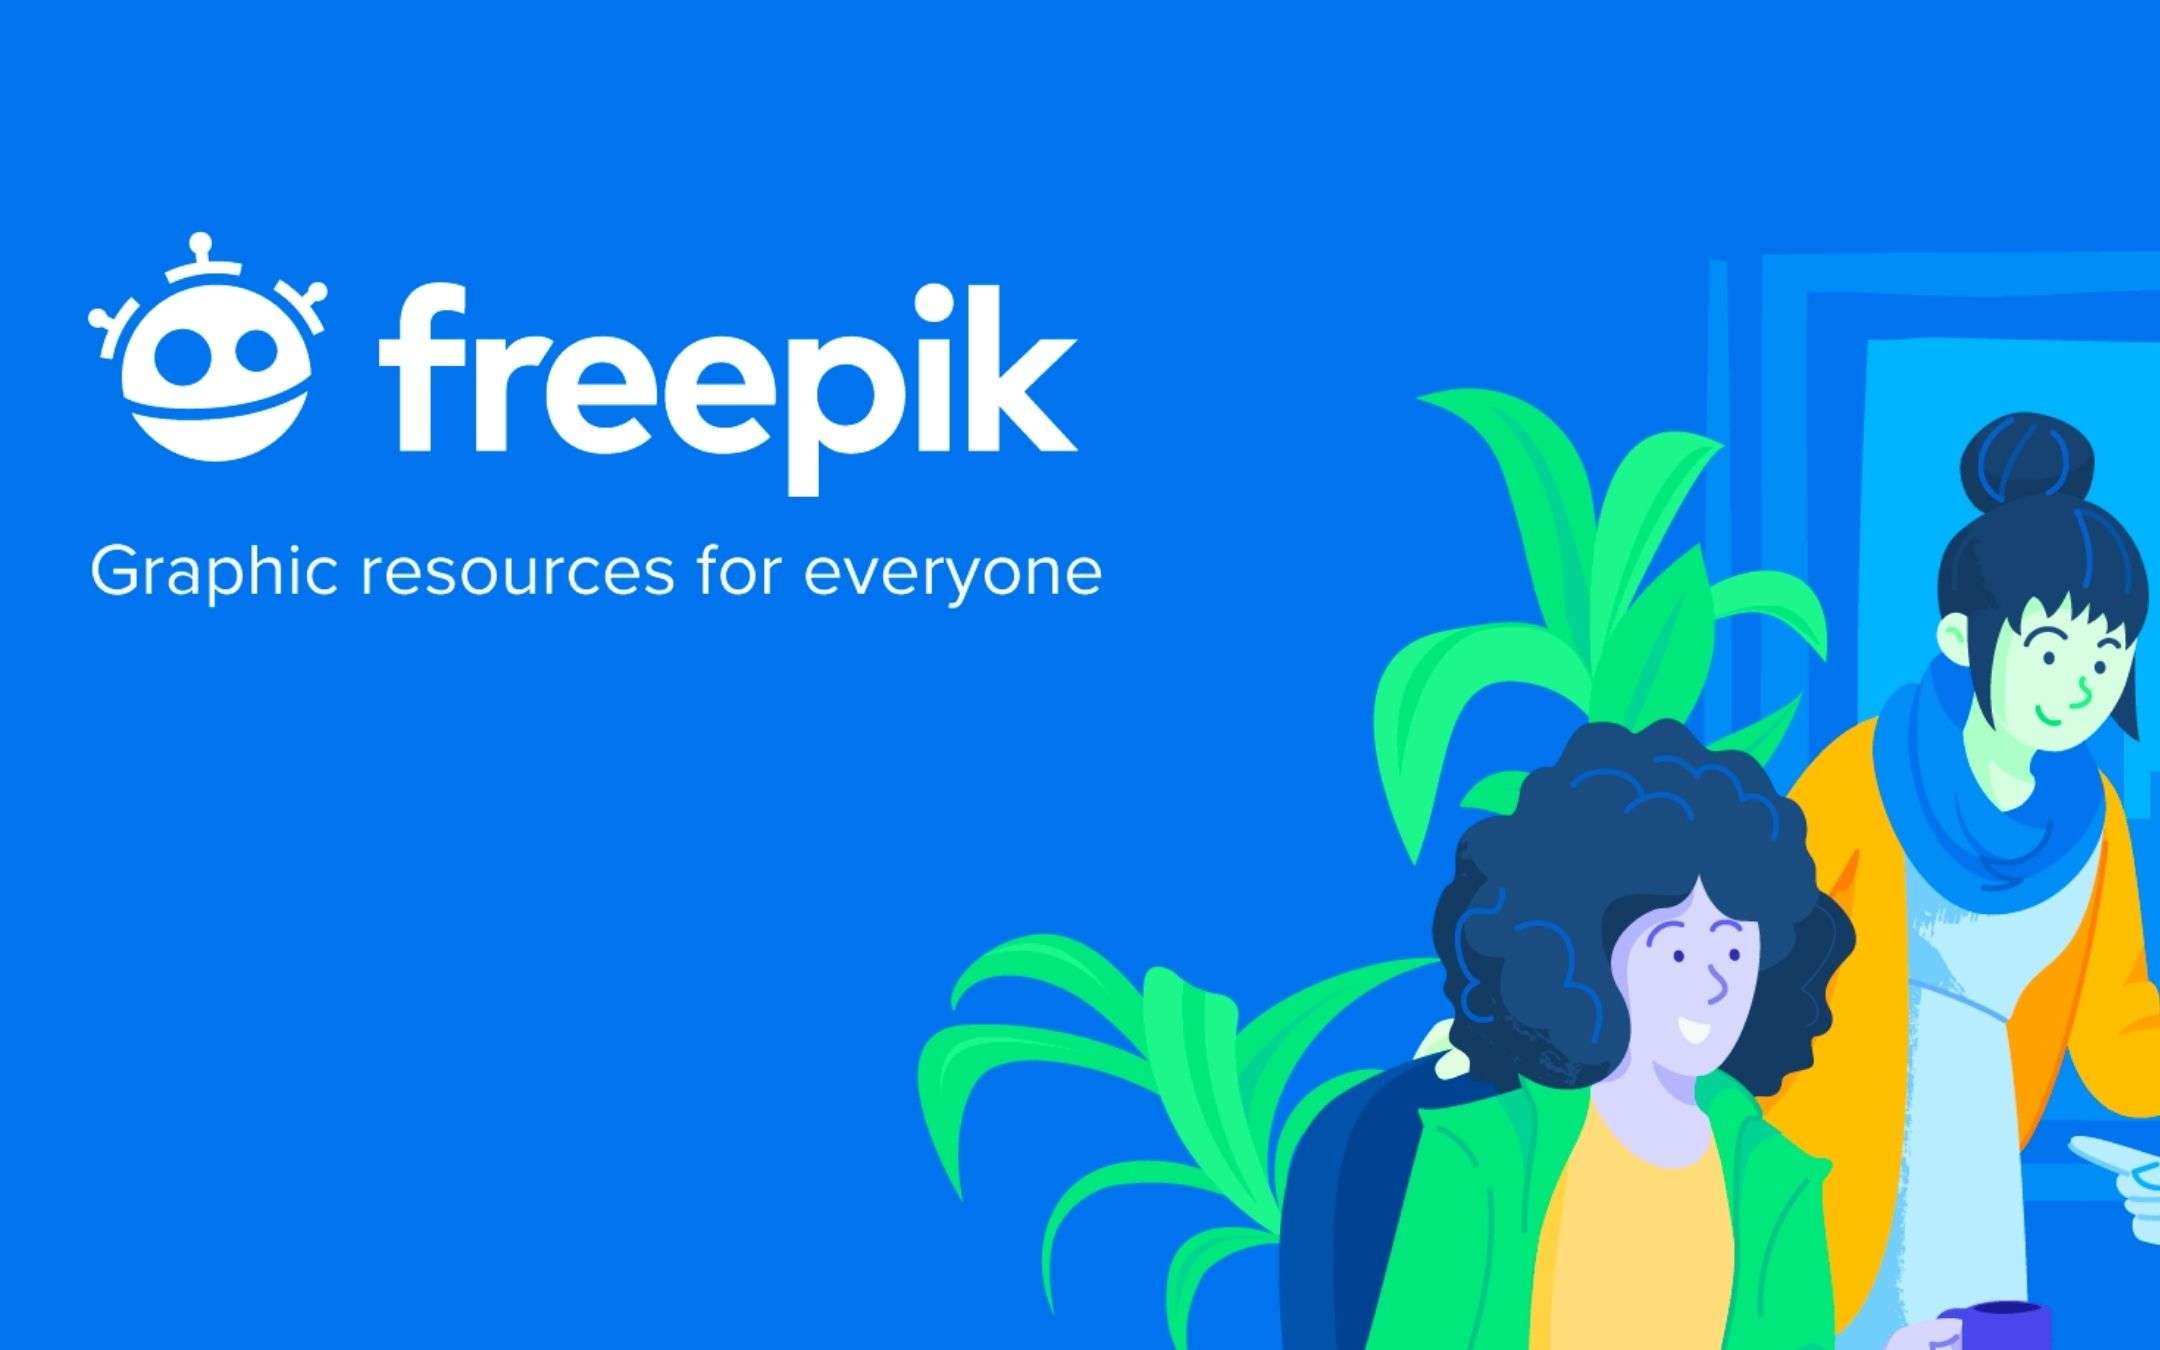 Freepik: data breach affects 8 million accounts